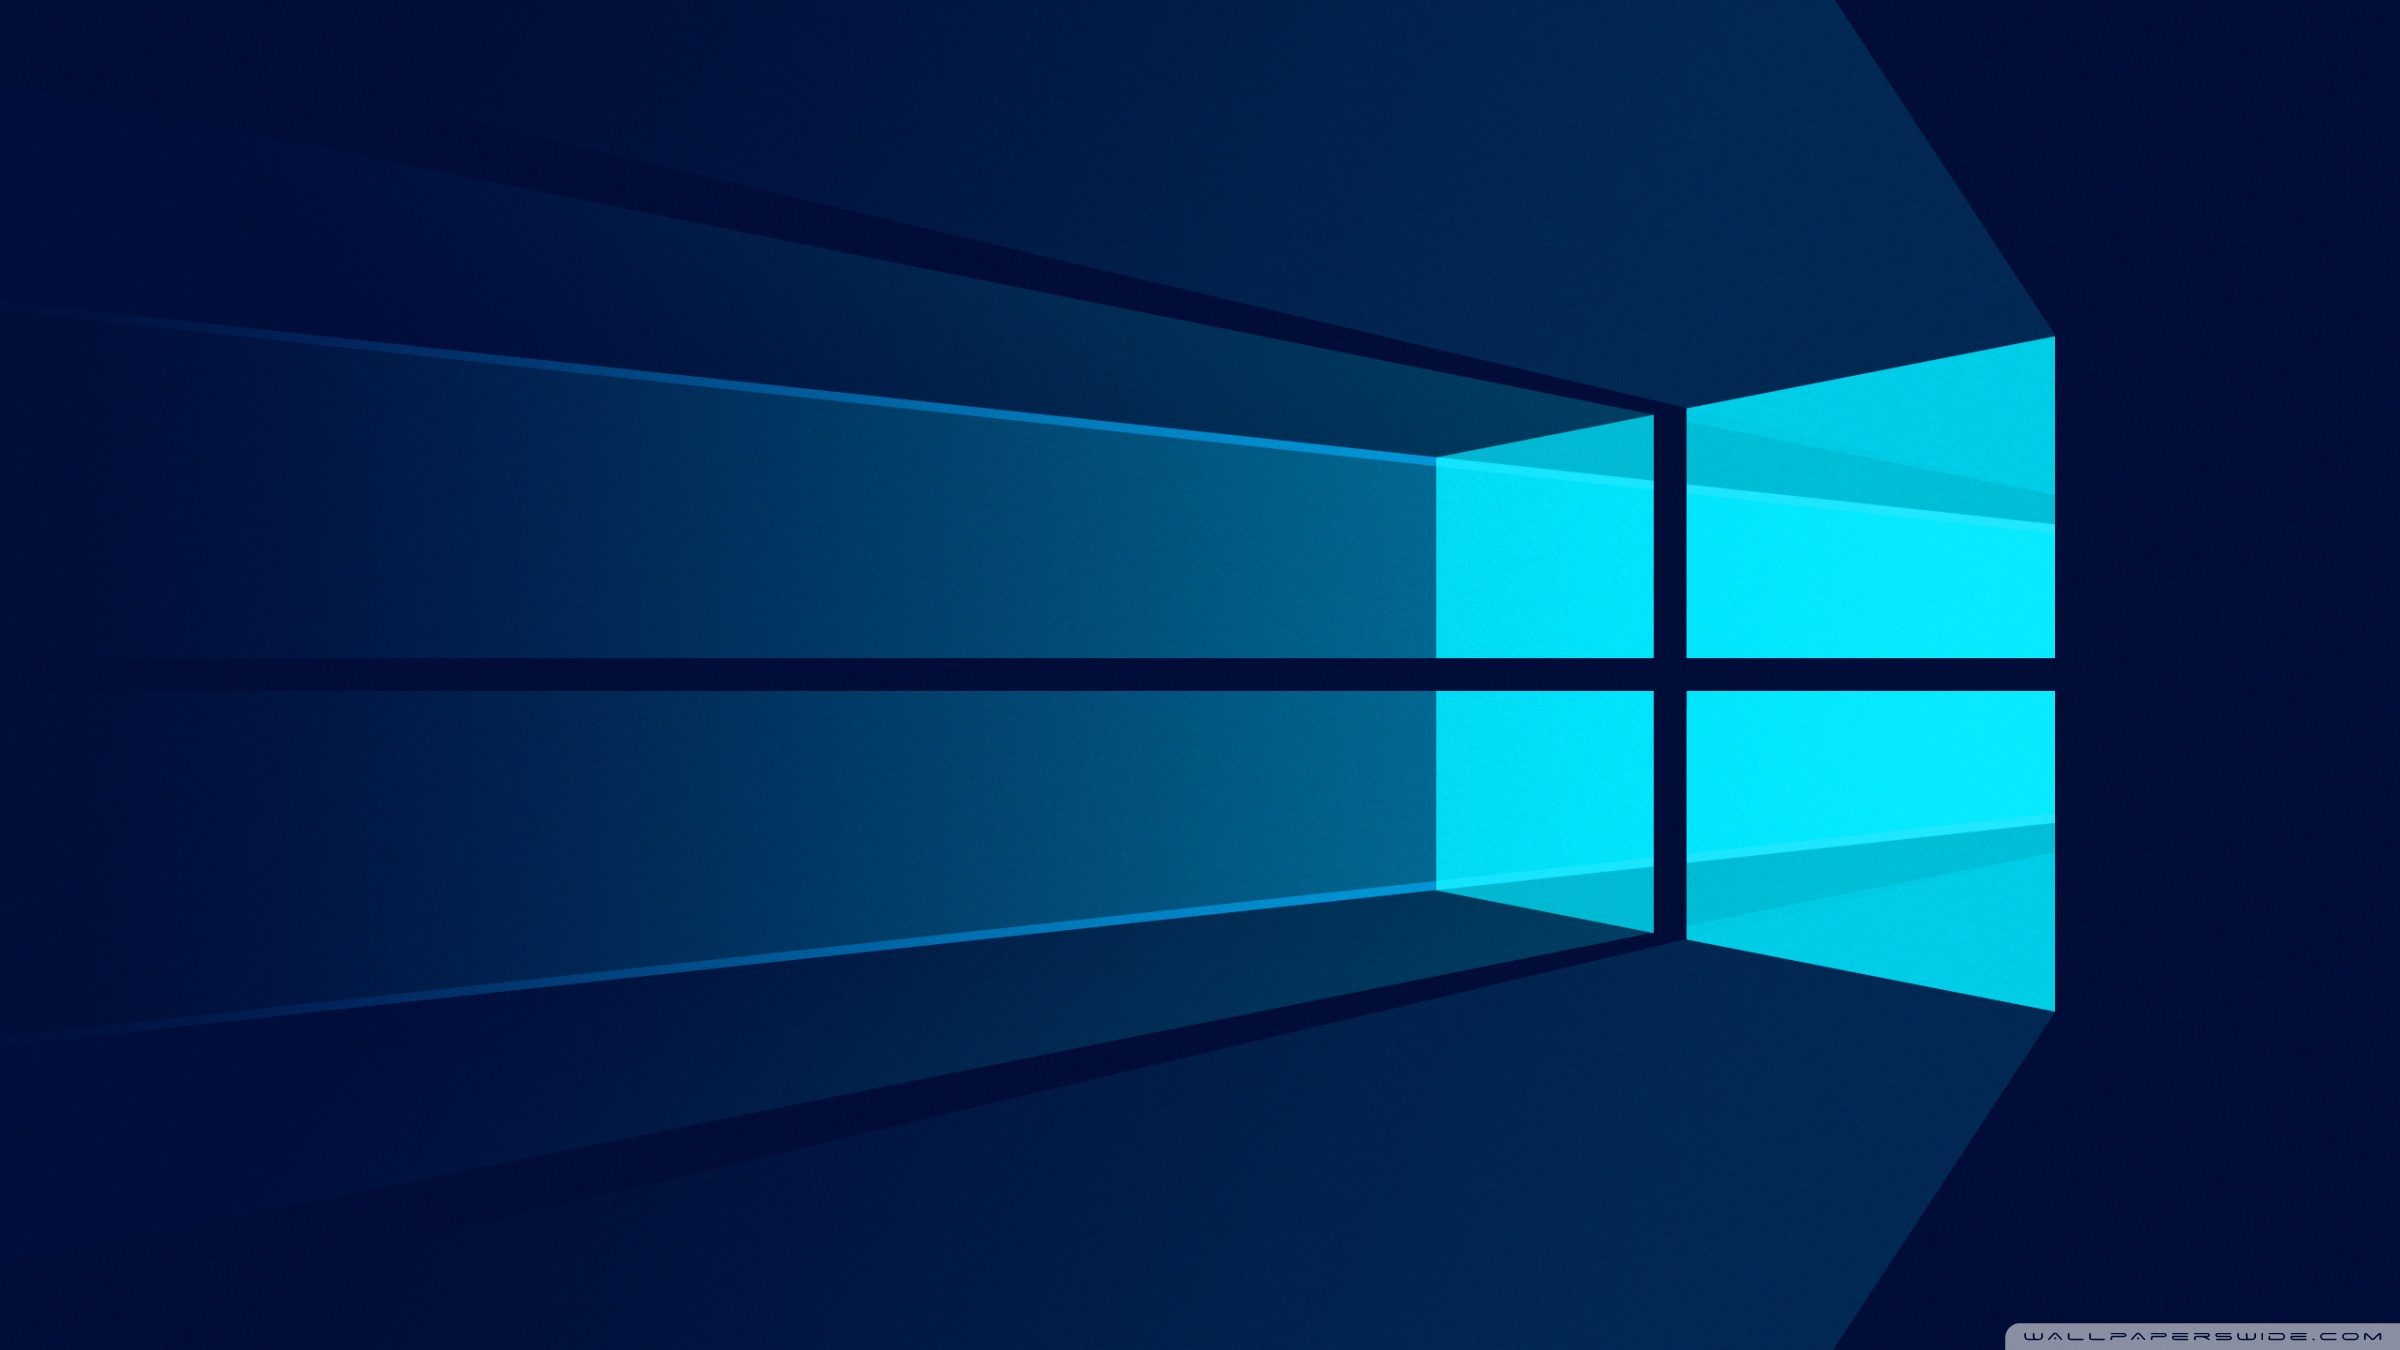 Windows 10 Material Ultra Hd Desktop Background Wallpaper For 4k